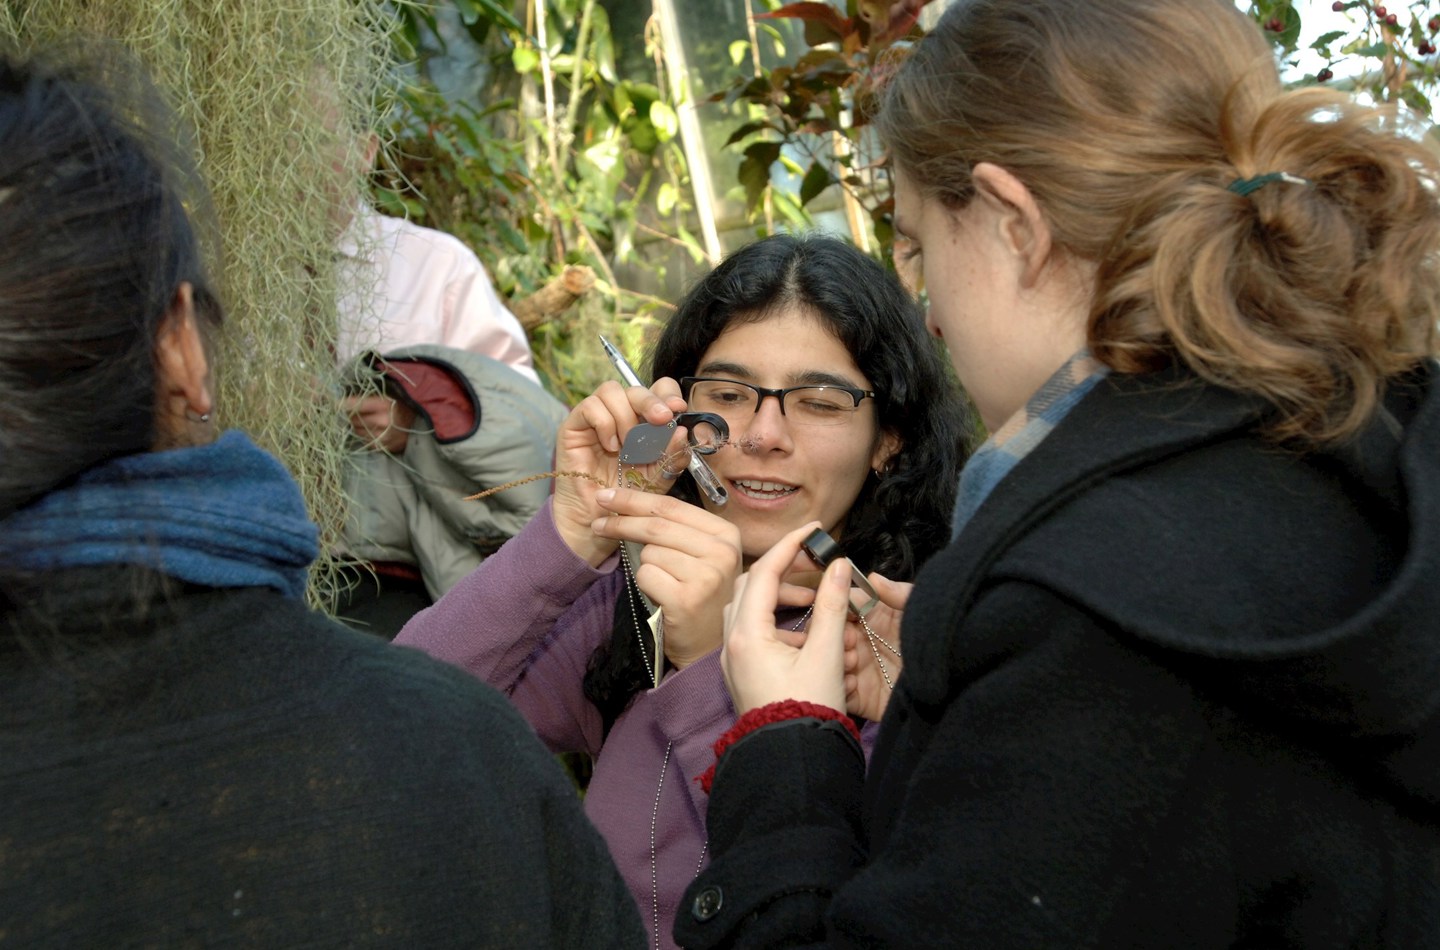 Students observing a specimen